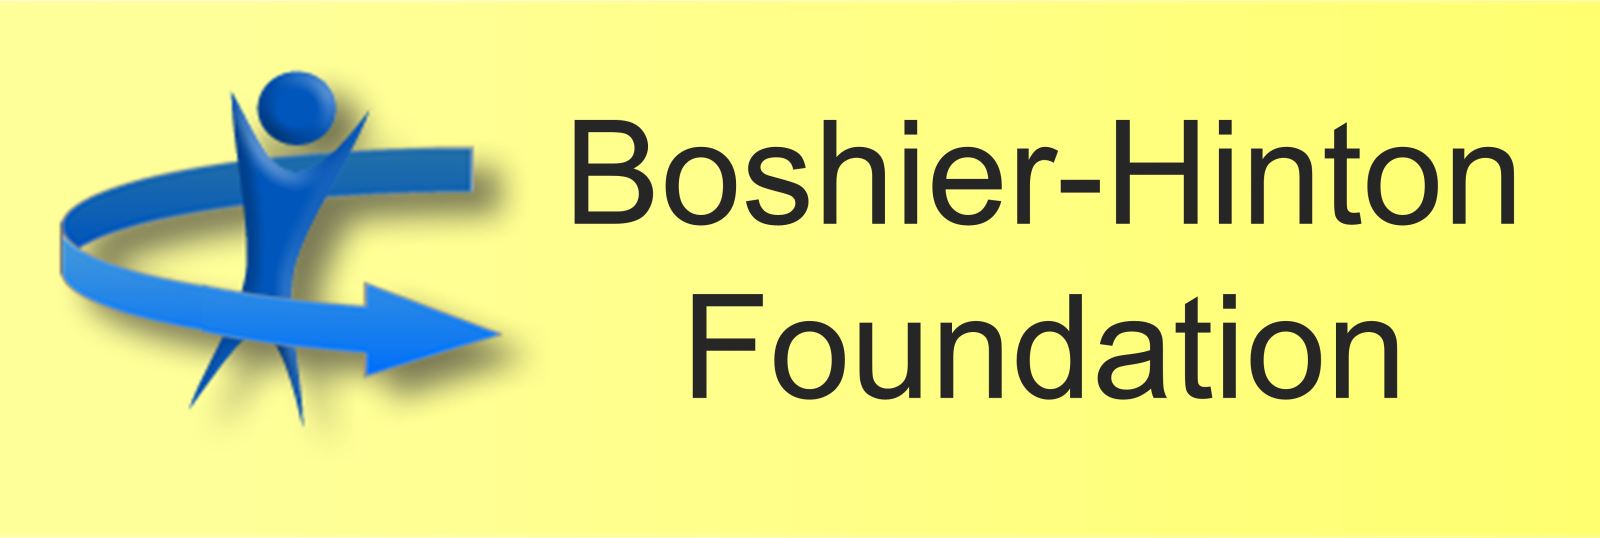 Boshier Hinton Foundation logo